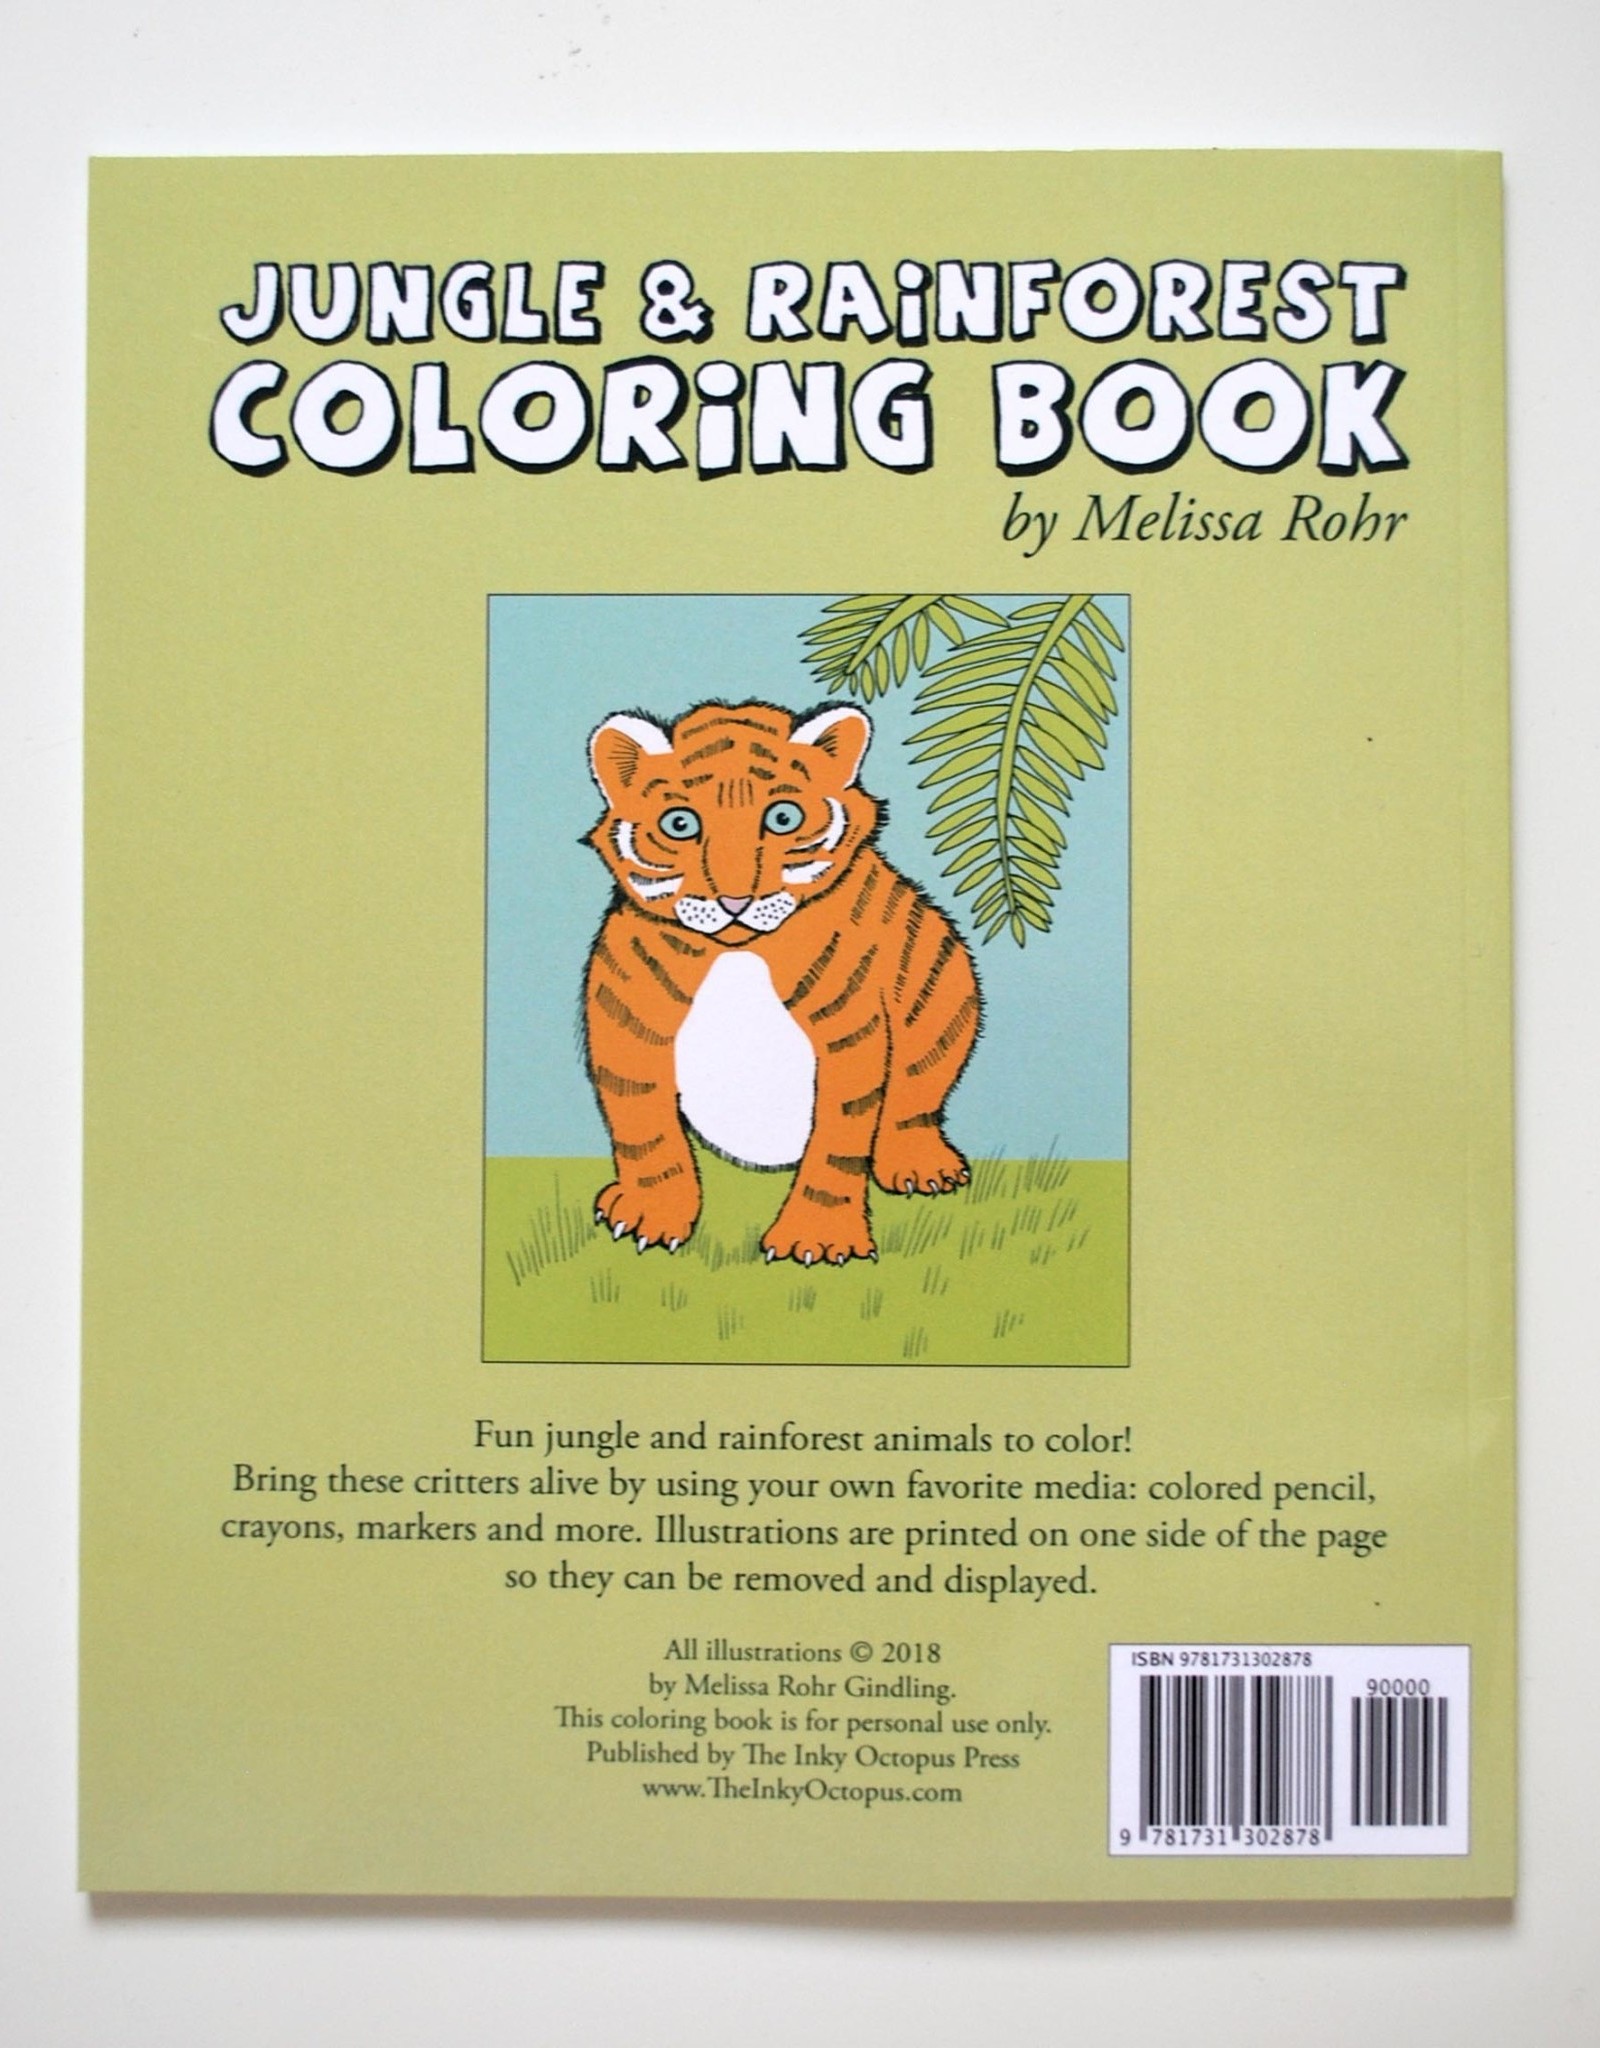 Melissa Rohr Gindling Jungle and Rainforest Coloring Book by Melissa Rohr Gindling